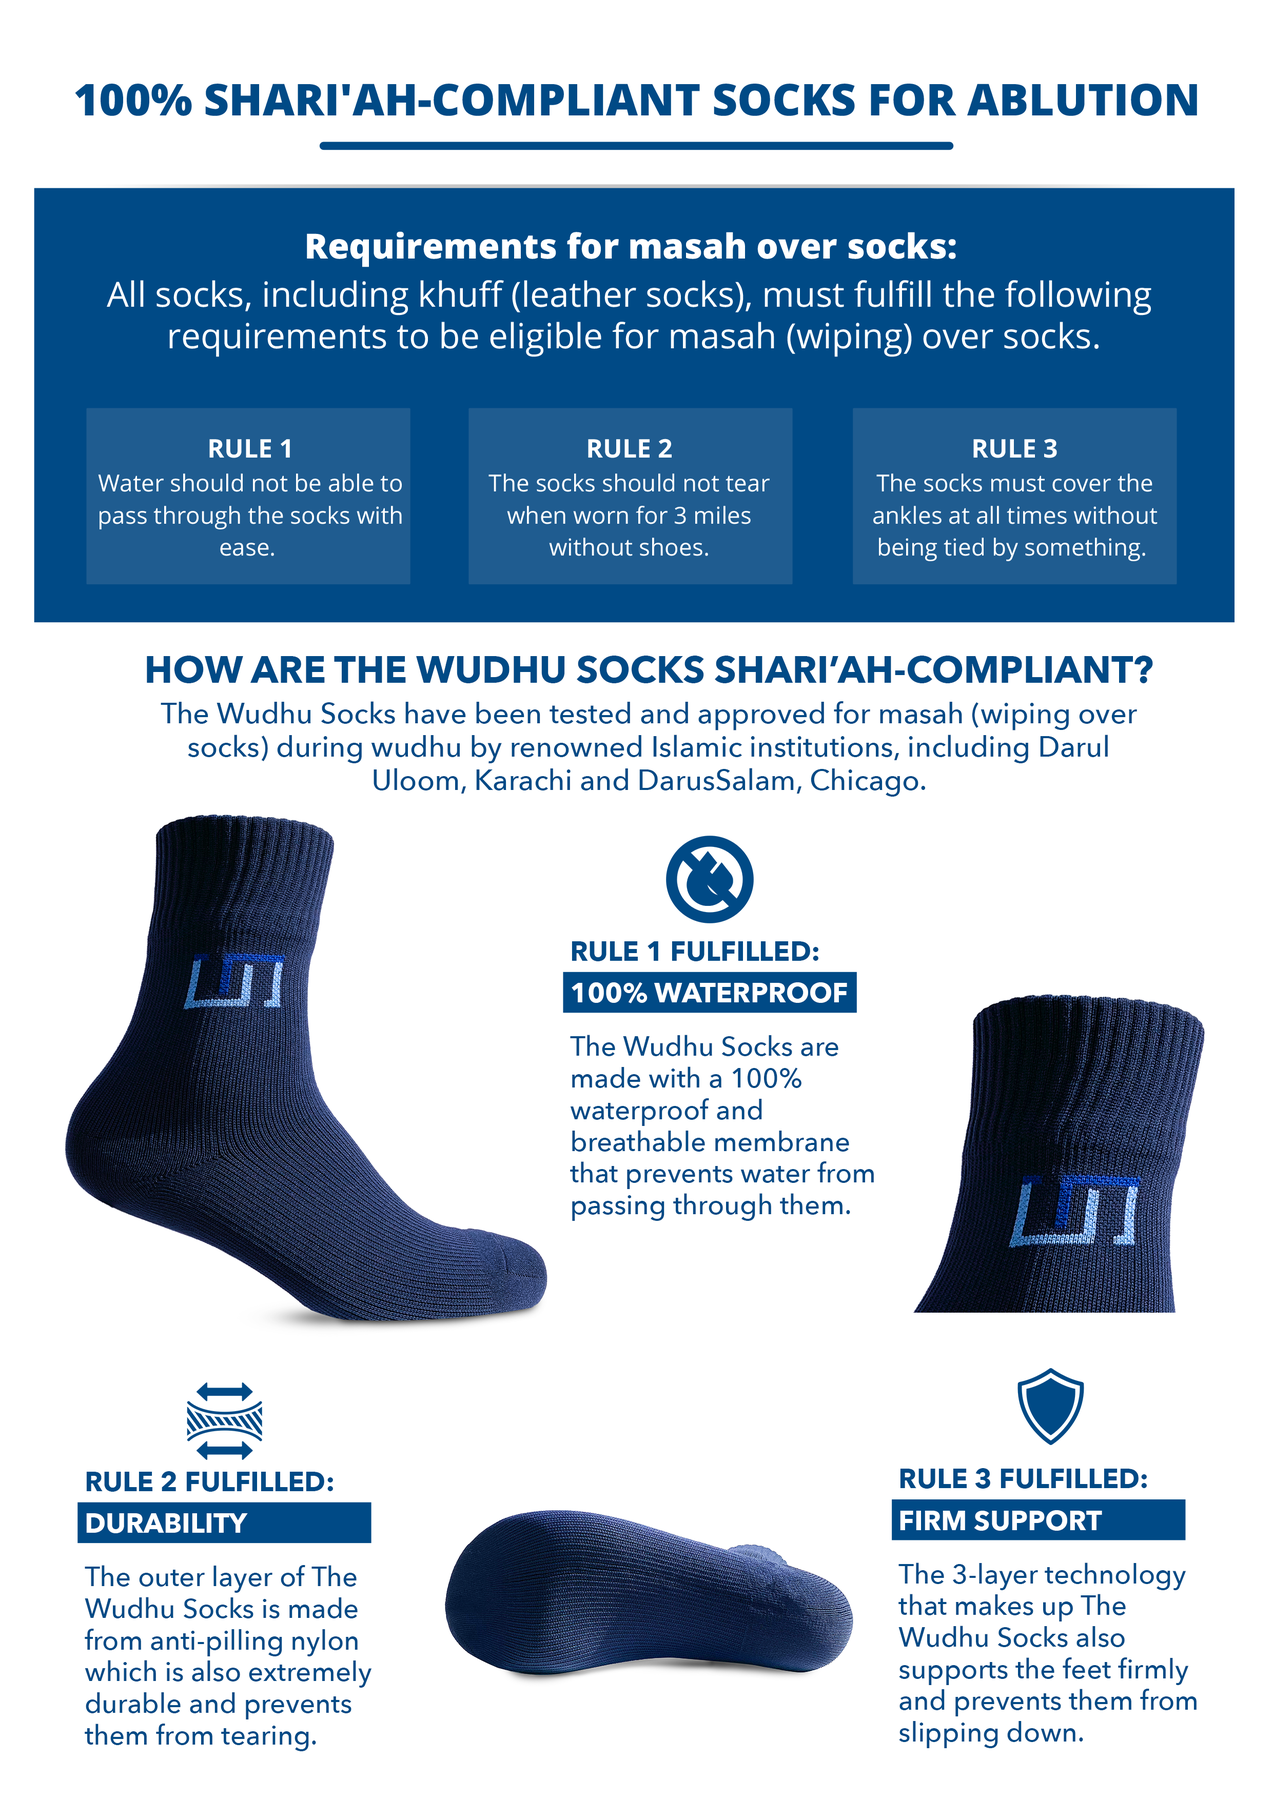 fatwa and requirements for The Wudhu Socks, socks for ablution (wudhu, wudu, wuzu socks), how are the wudhu socks shariah compliant